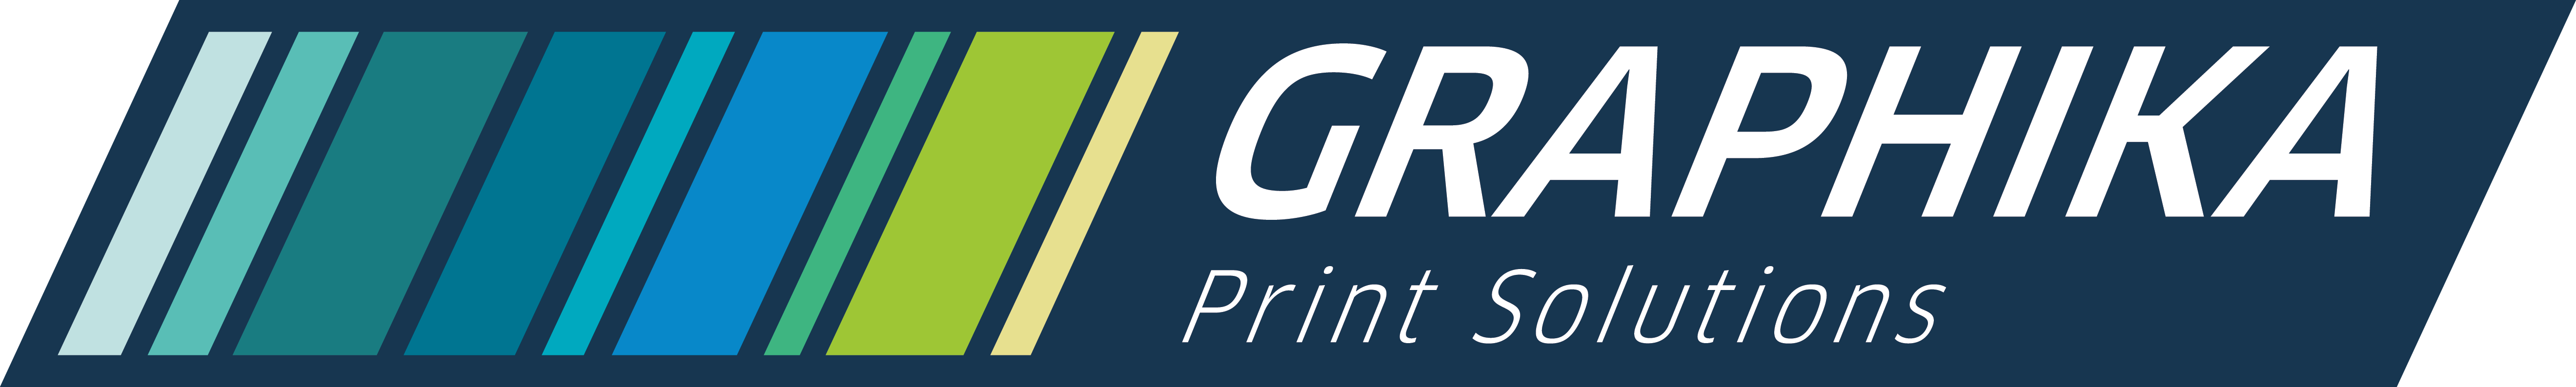 Graphika Print Solutions